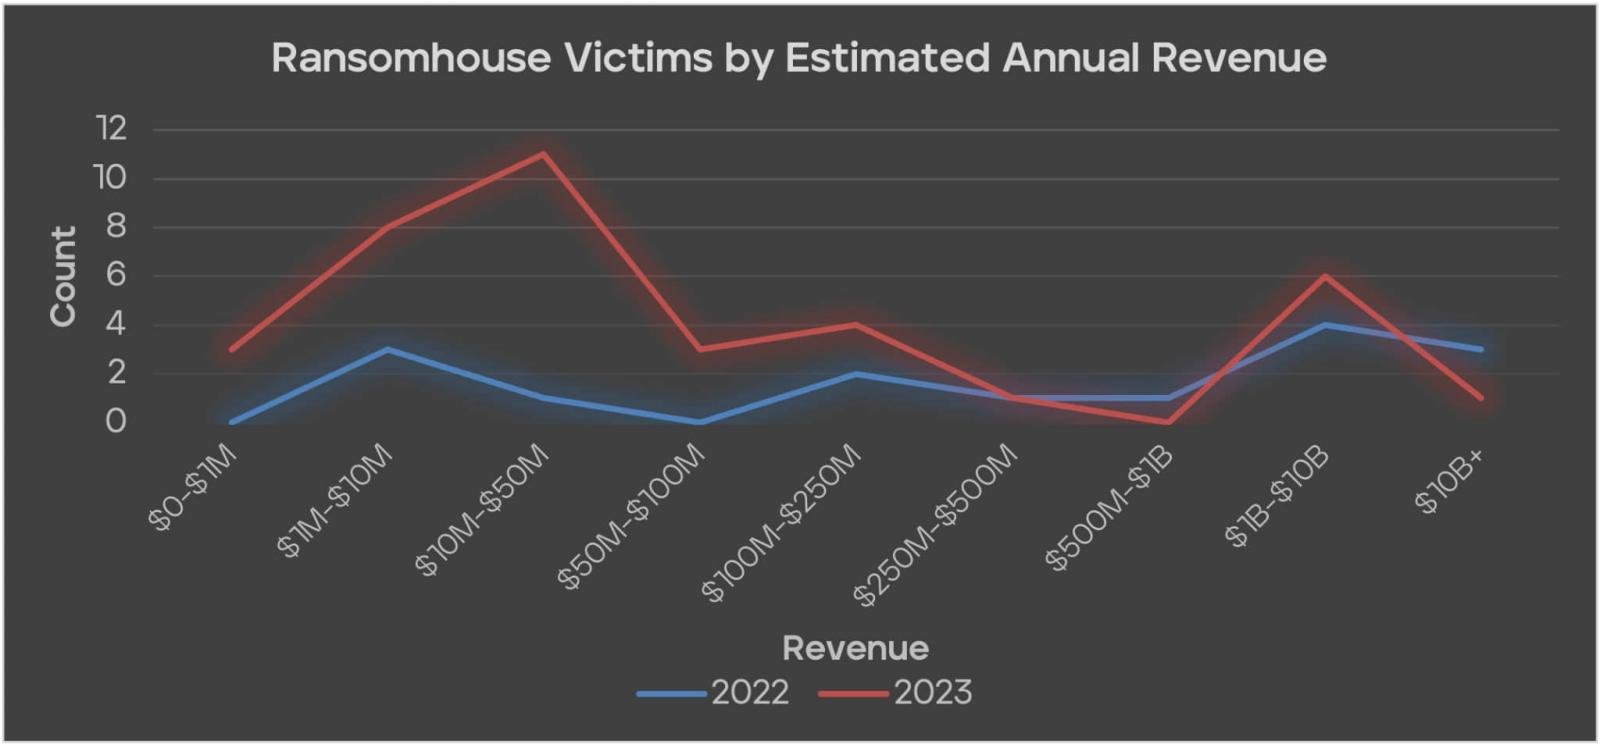 RansomHouse's victims' size